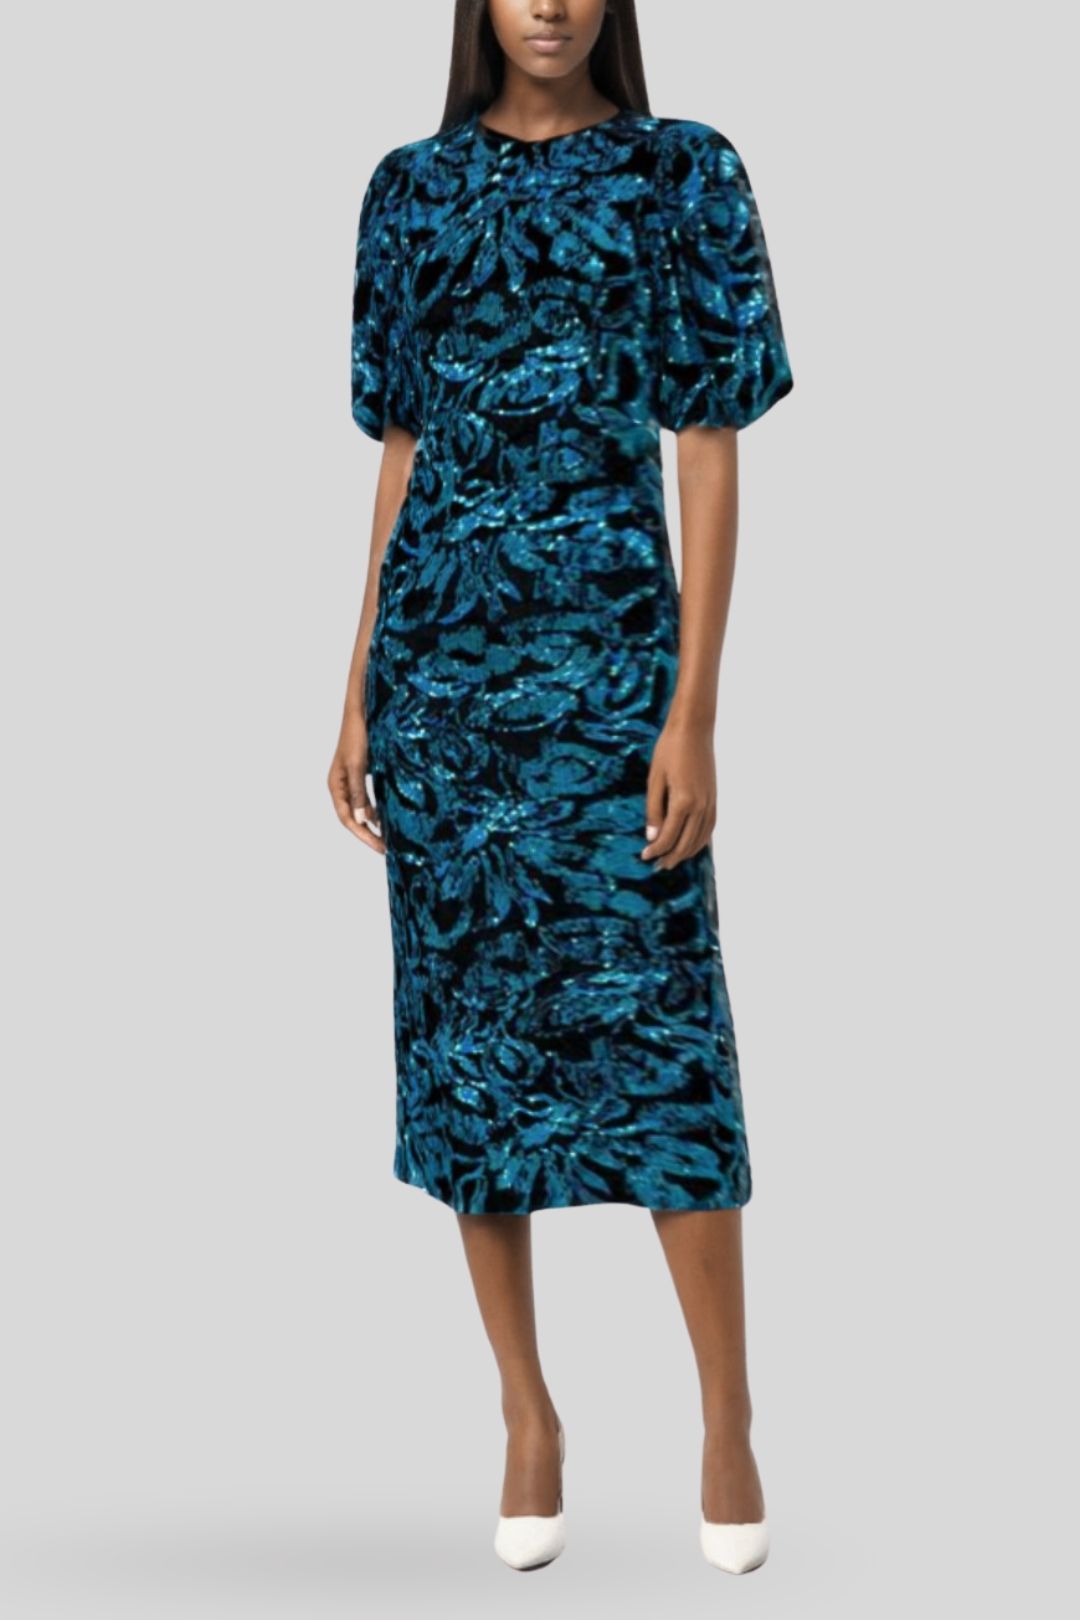 Yasliby 2/4 Sequin Dress Midi